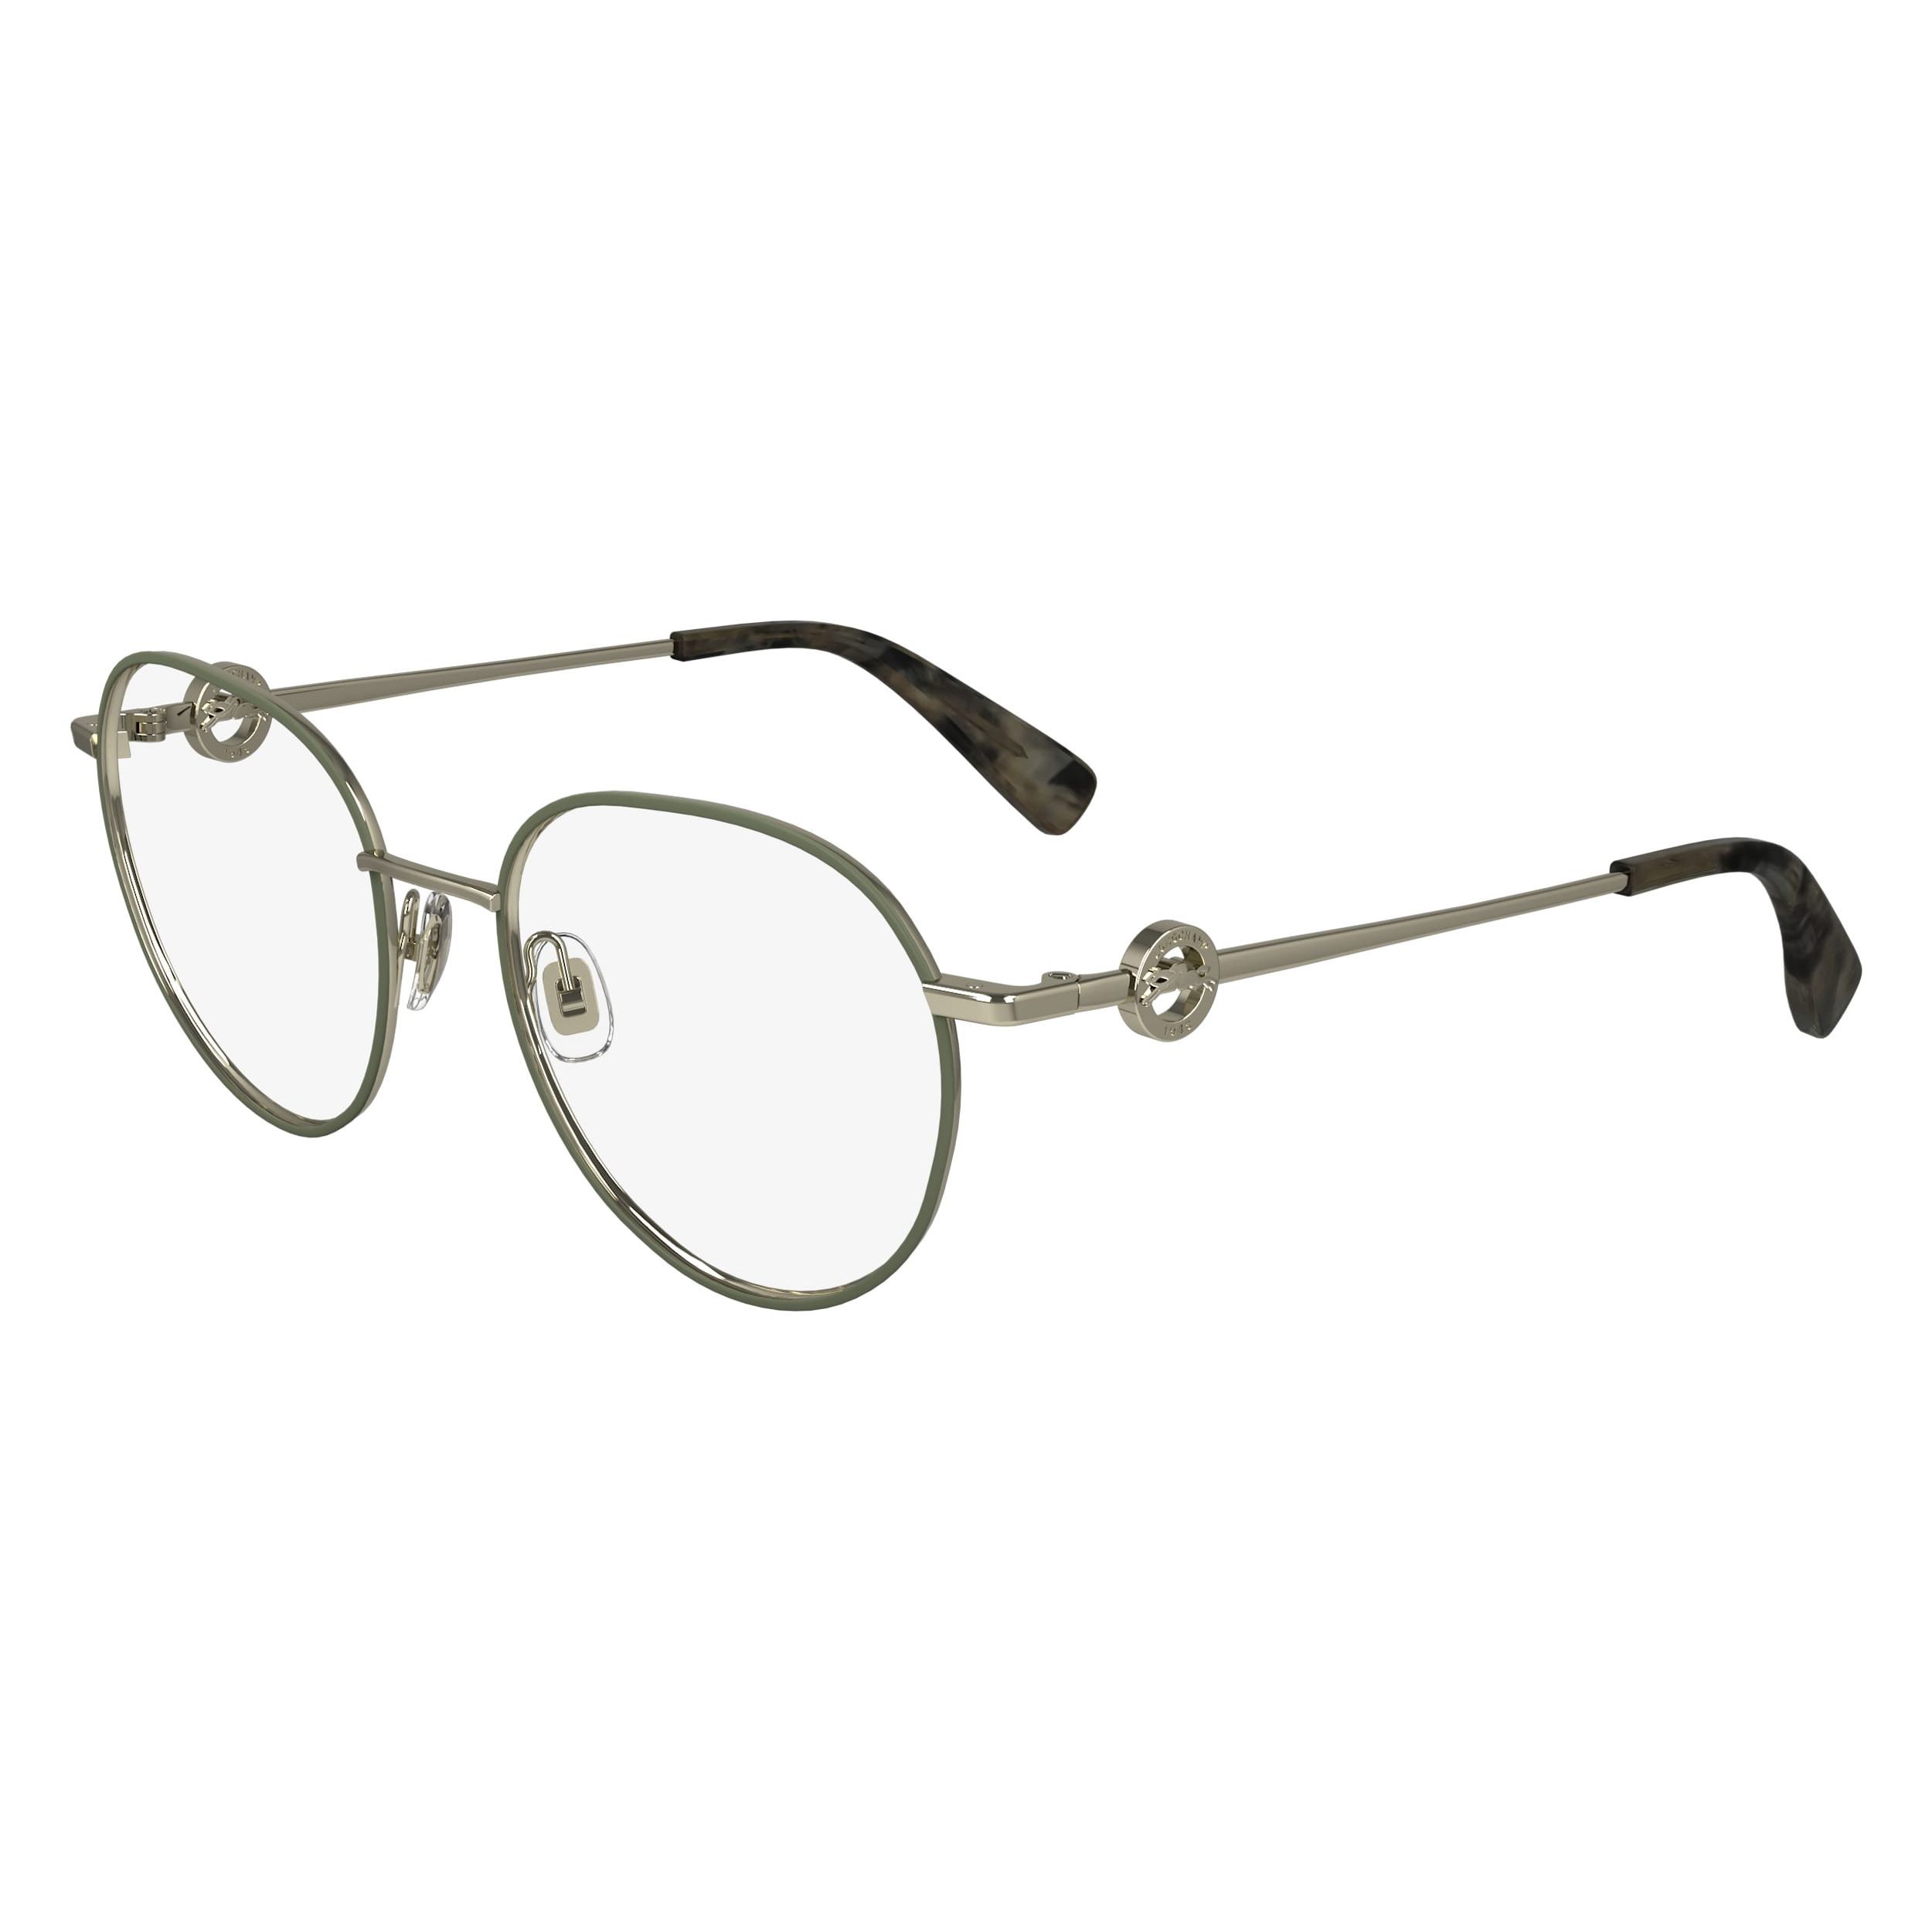 LO2165 Round Eyeglasses 708 - size 52